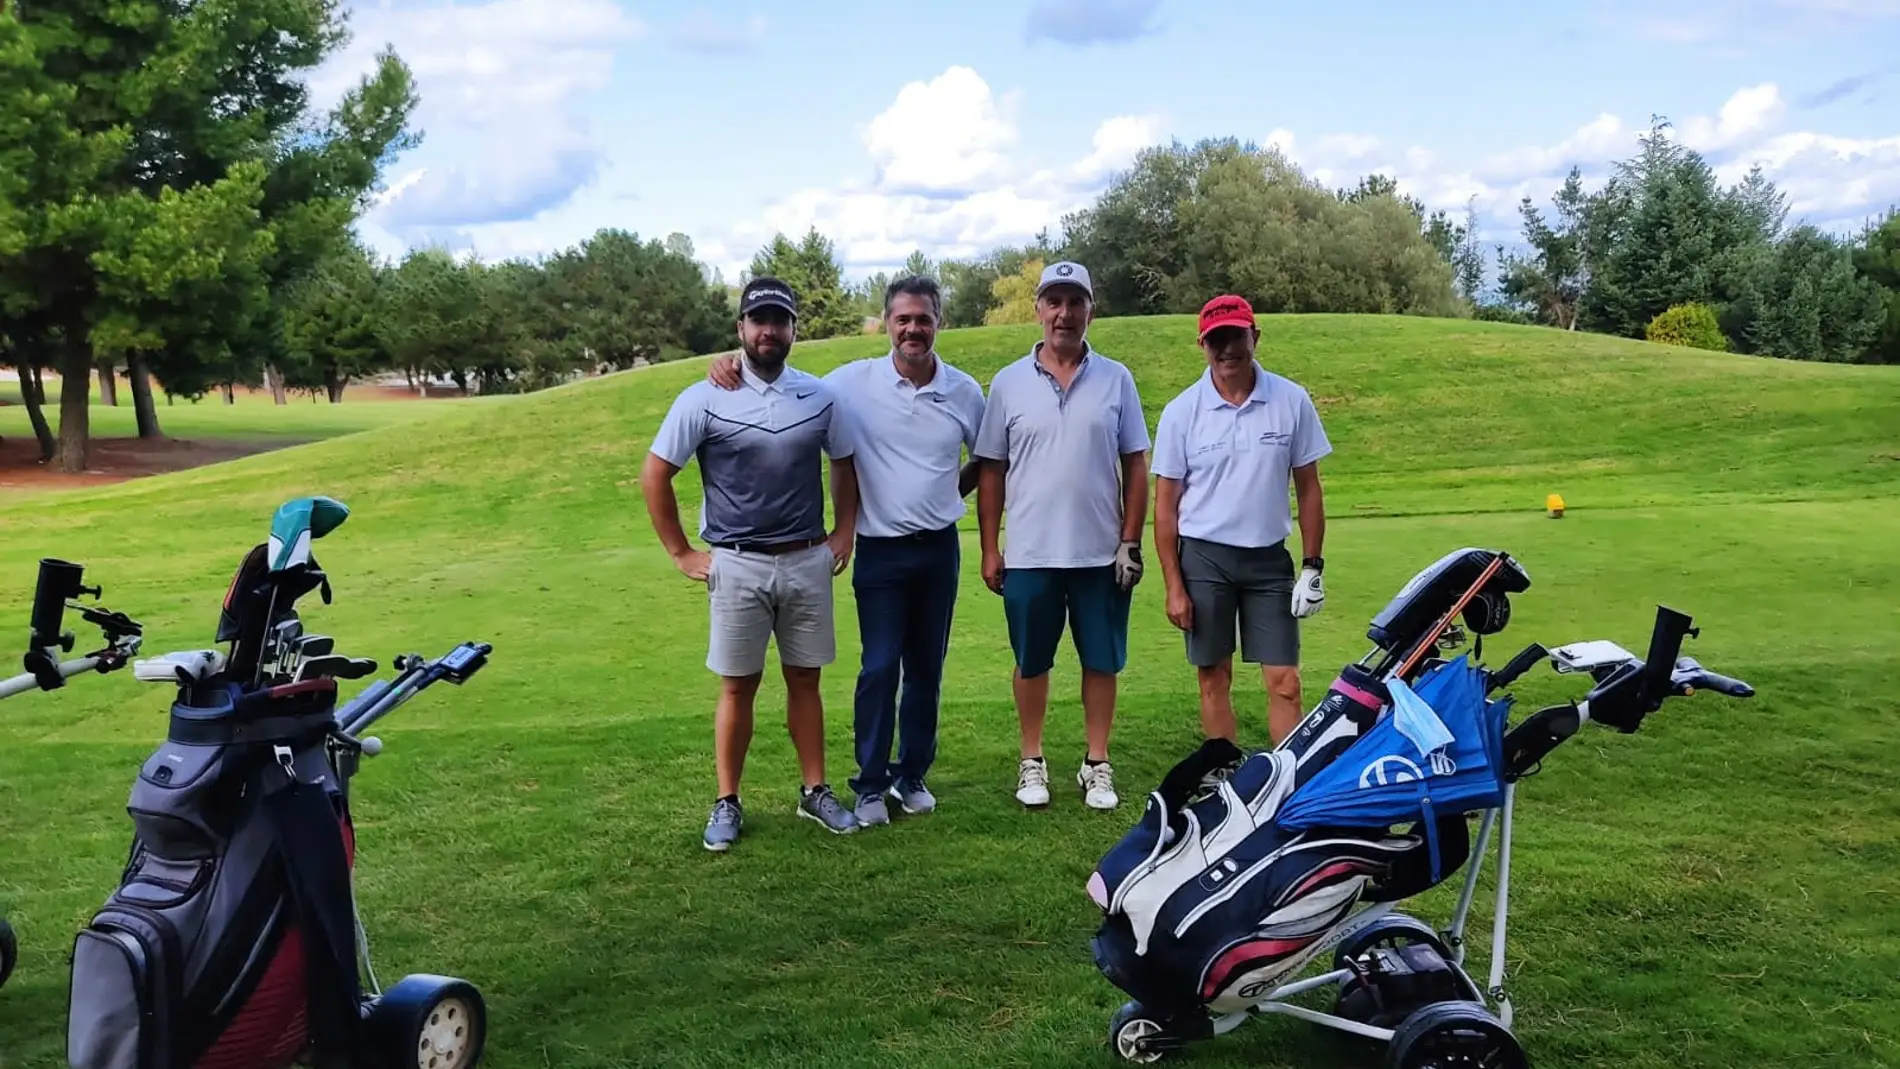 Torneo de Golf Onda Cero Ourense 2021 en Montealegre Club de Golf